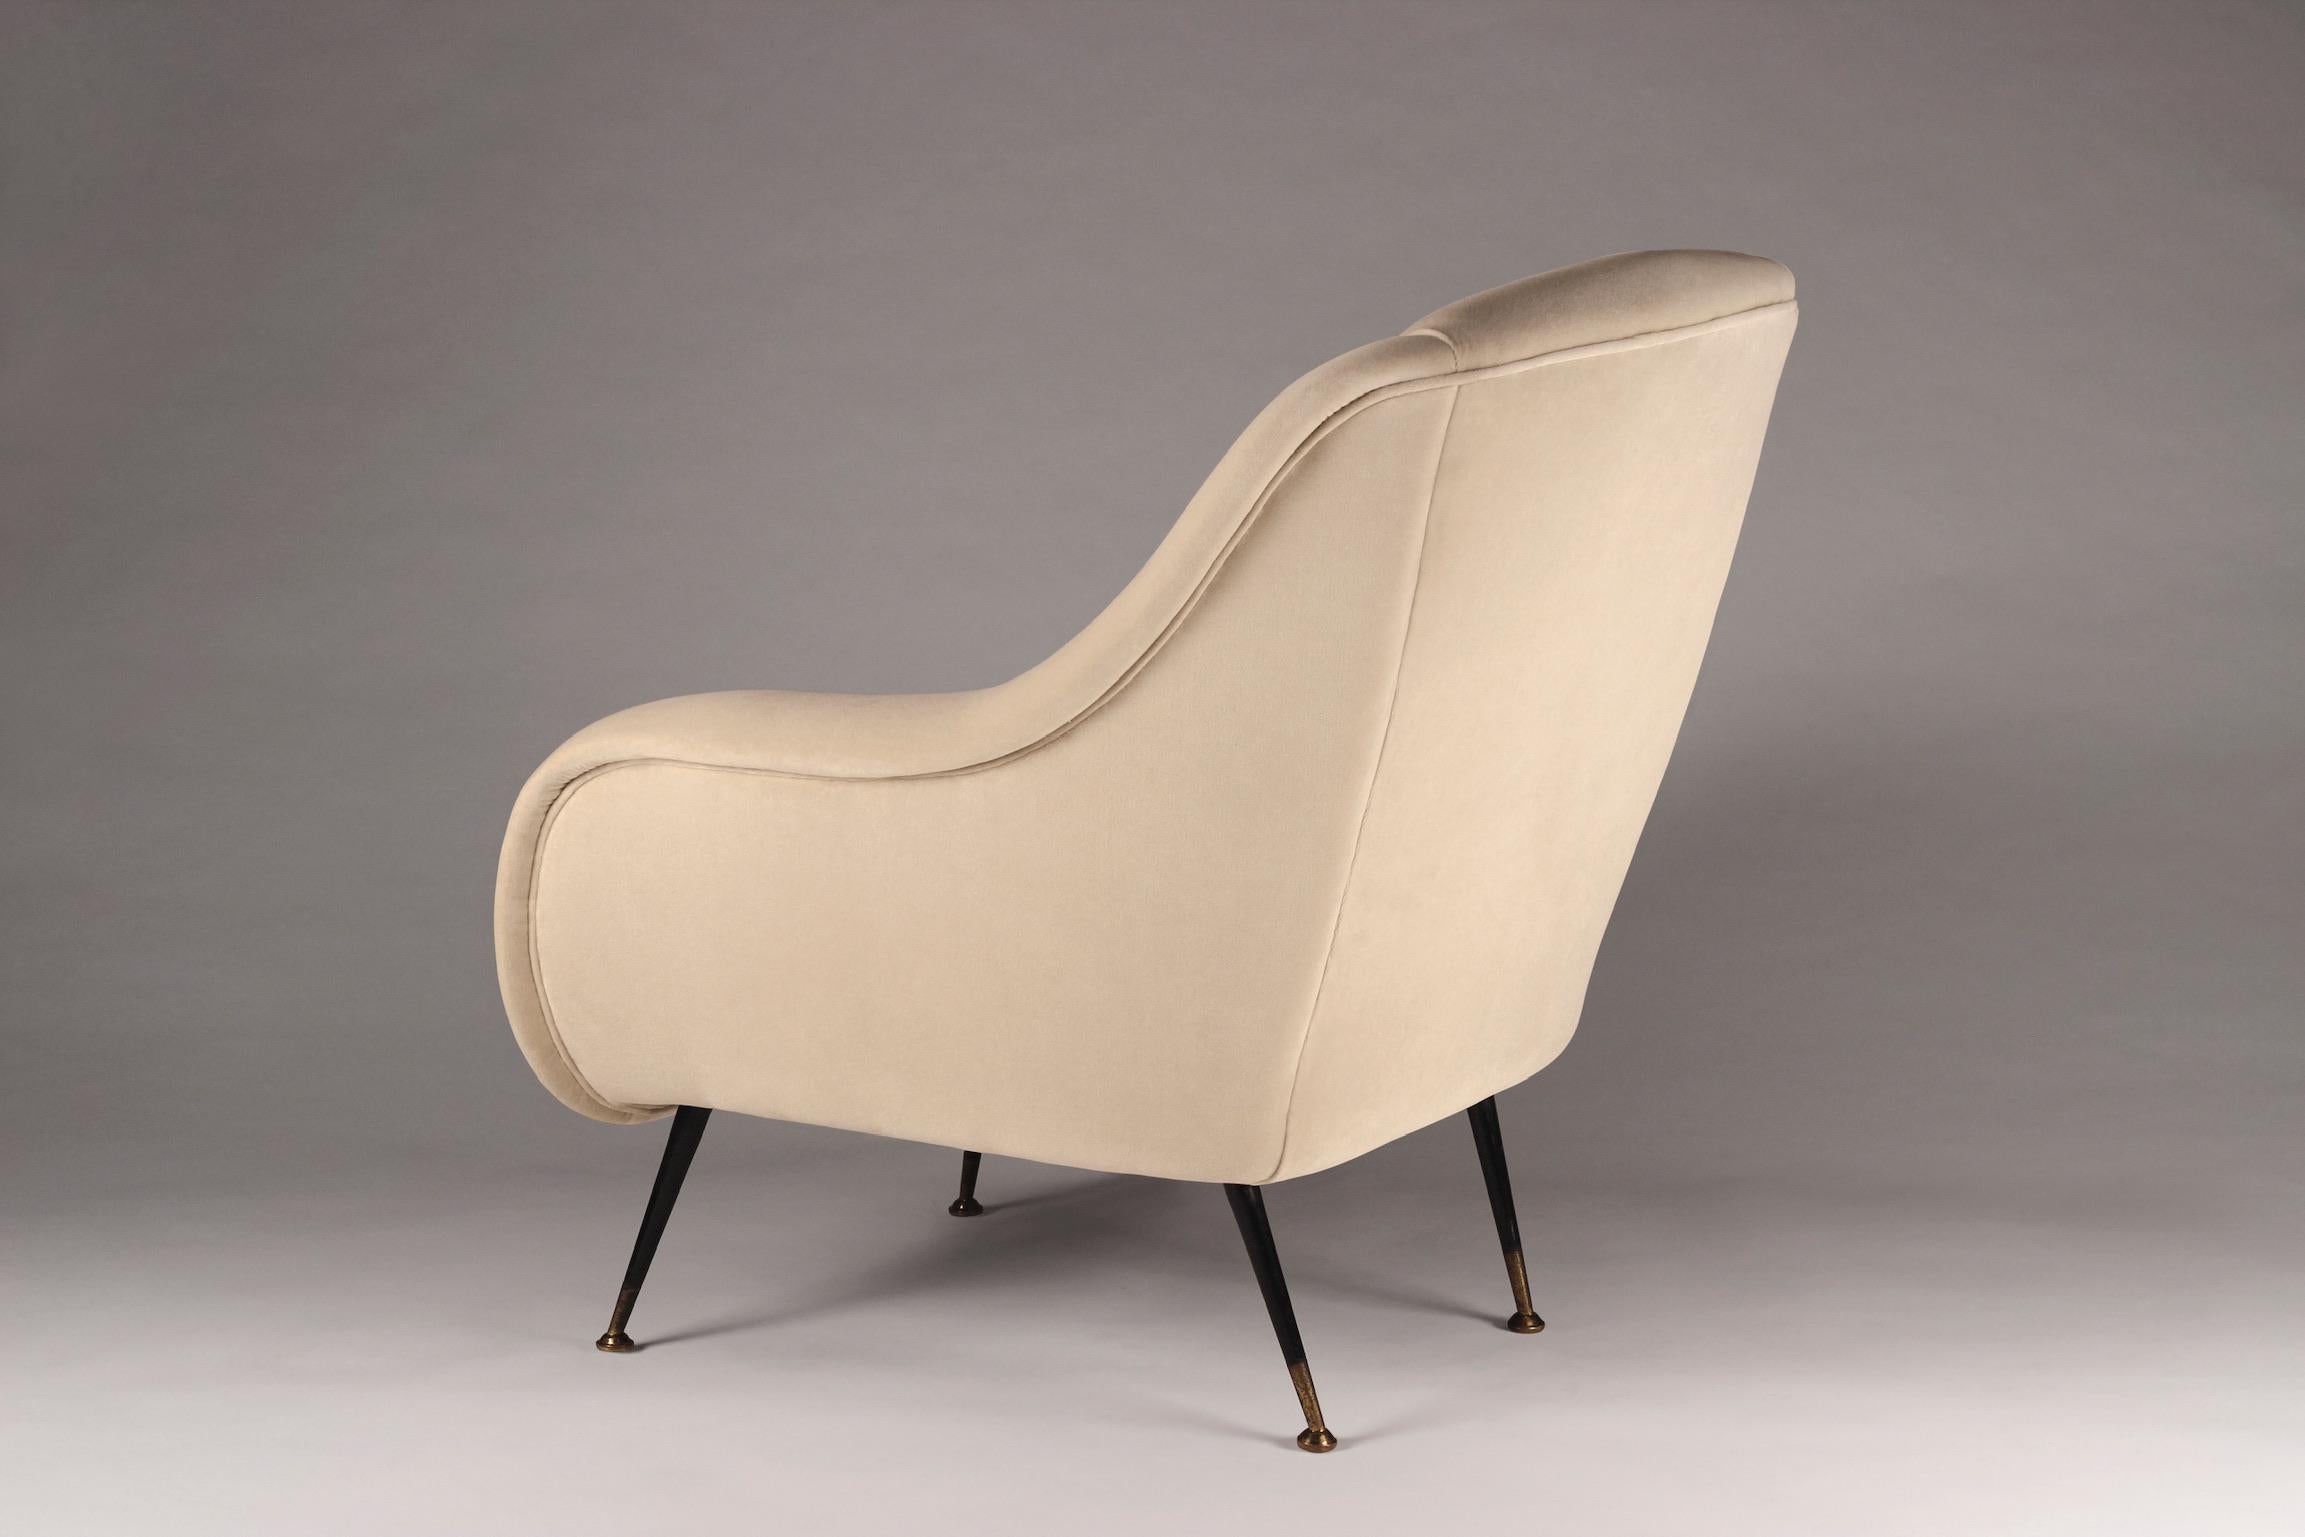 Contemporary Mid-Century Modern Style Inspired Italian Lounge Chair ‘Sophia’ in Ivory Velvet For Sale